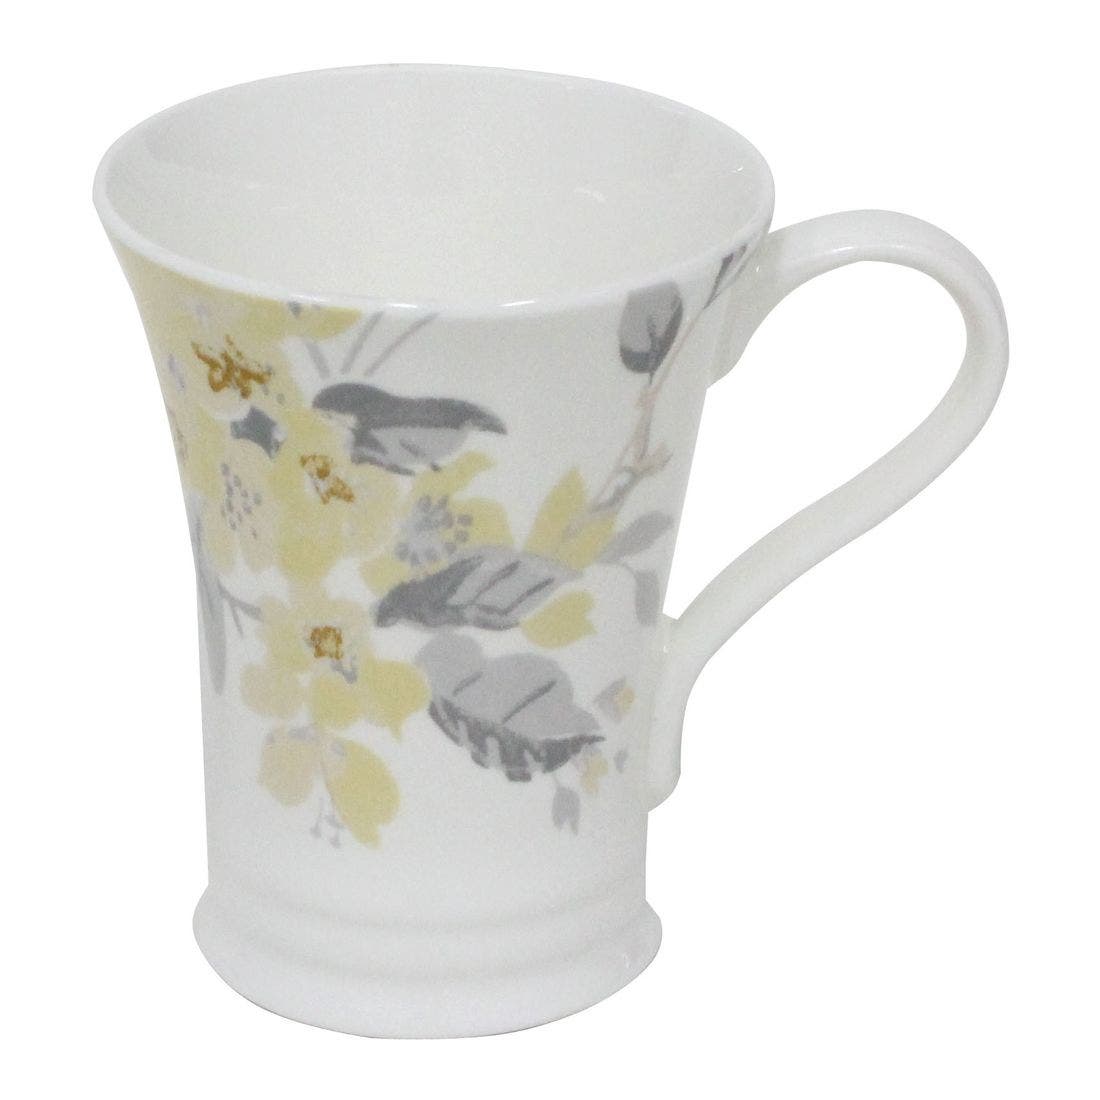 25032018-vintage-home-decor-tableware-kitchenware-cup-mug-teapot-01